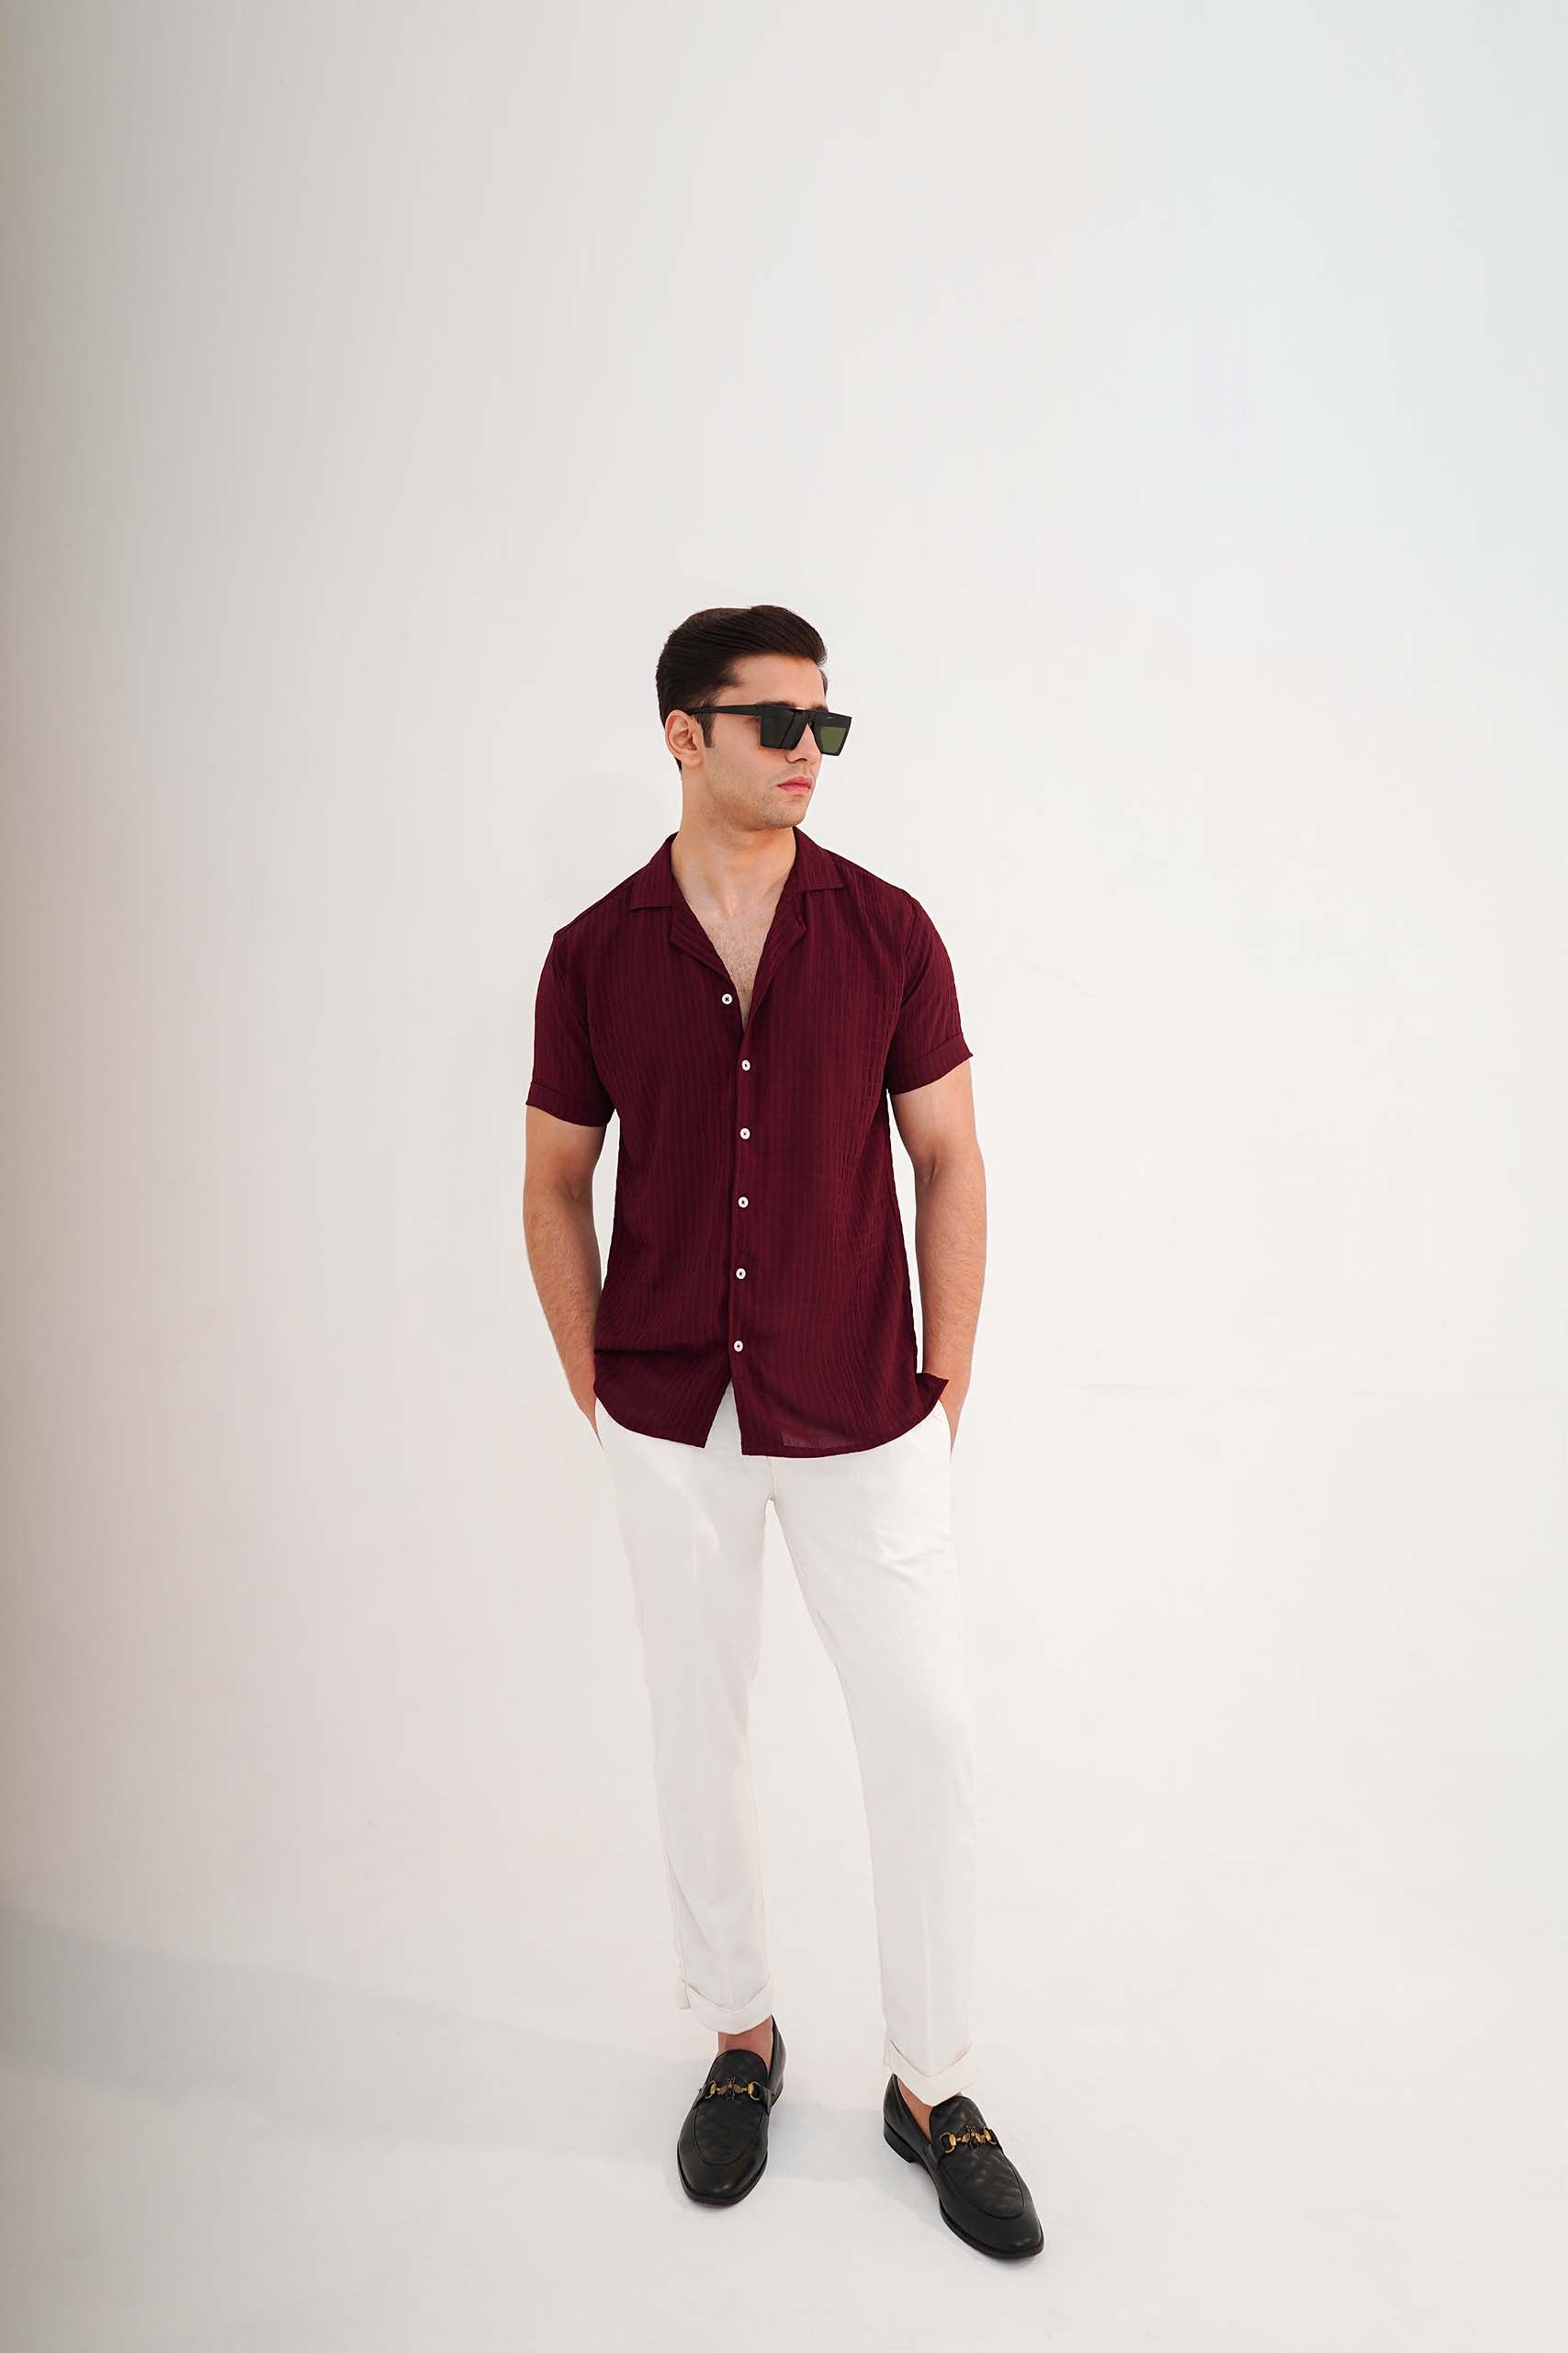 White shirt, burgundy pants and sand bag | Just a Pretty Style | Style,  Fashion, Stylish